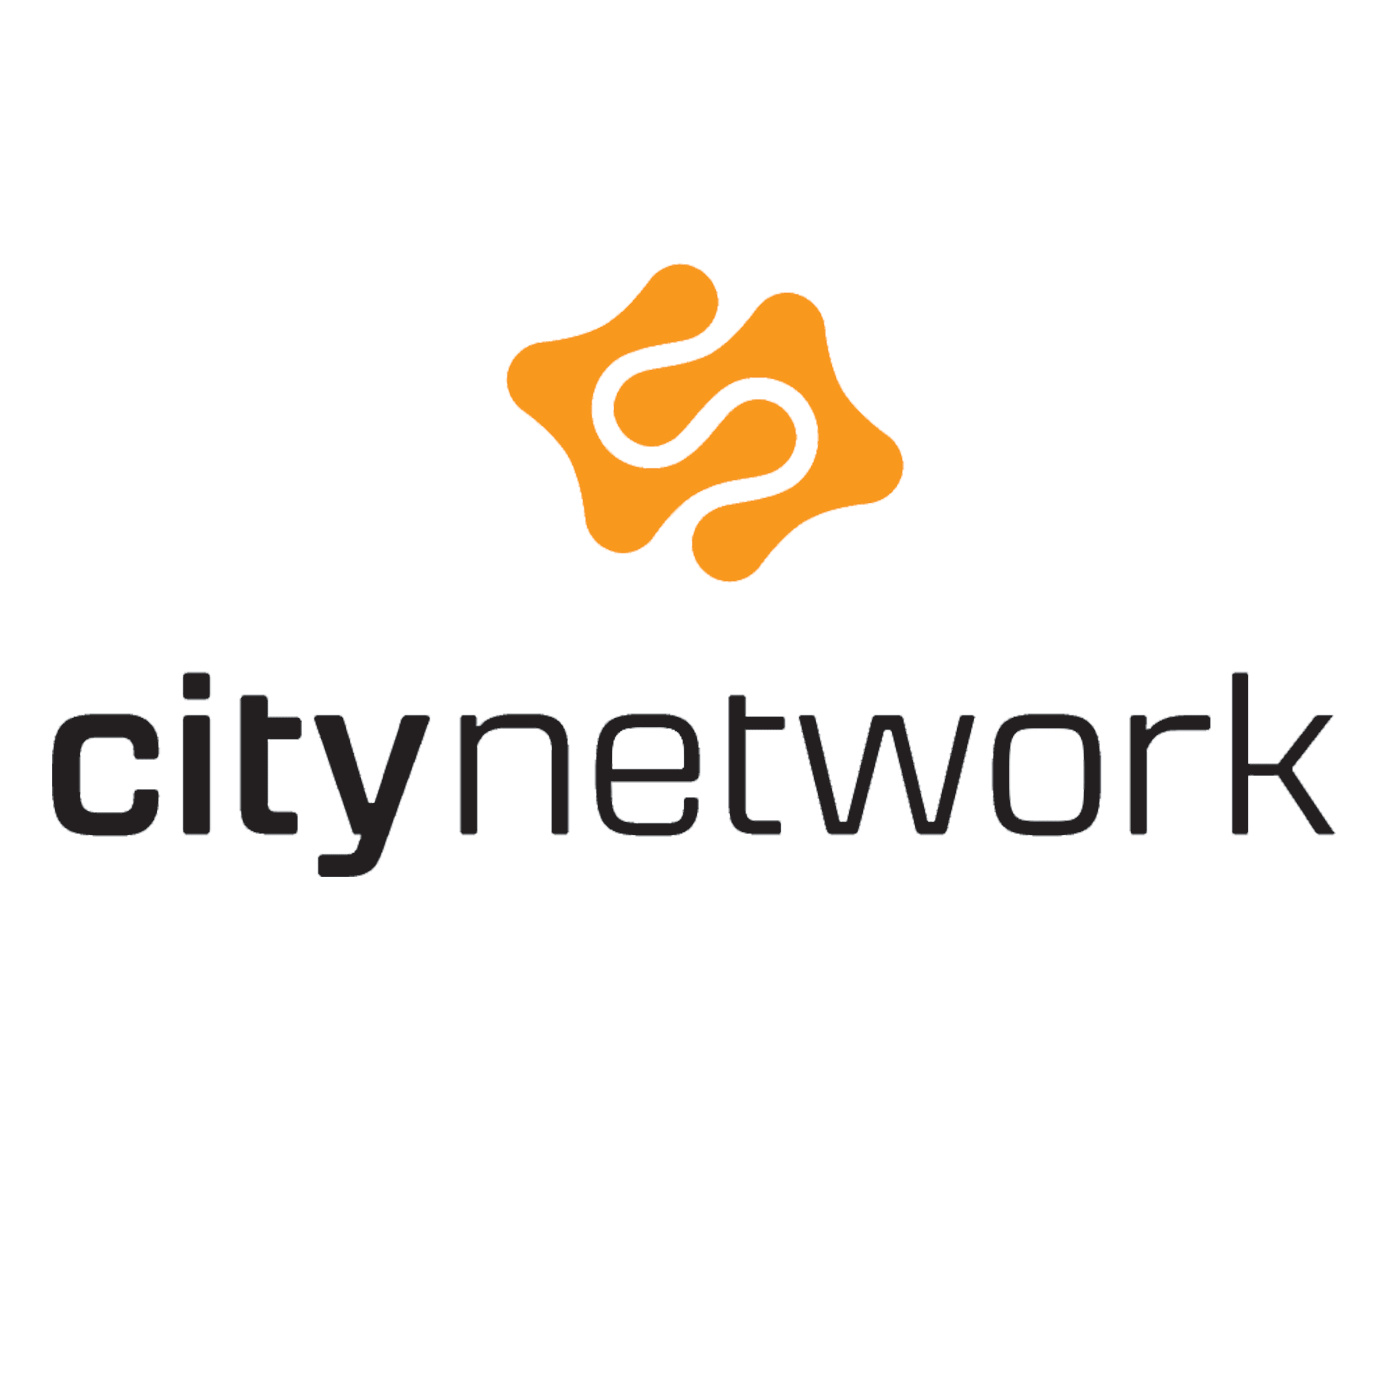 City Network